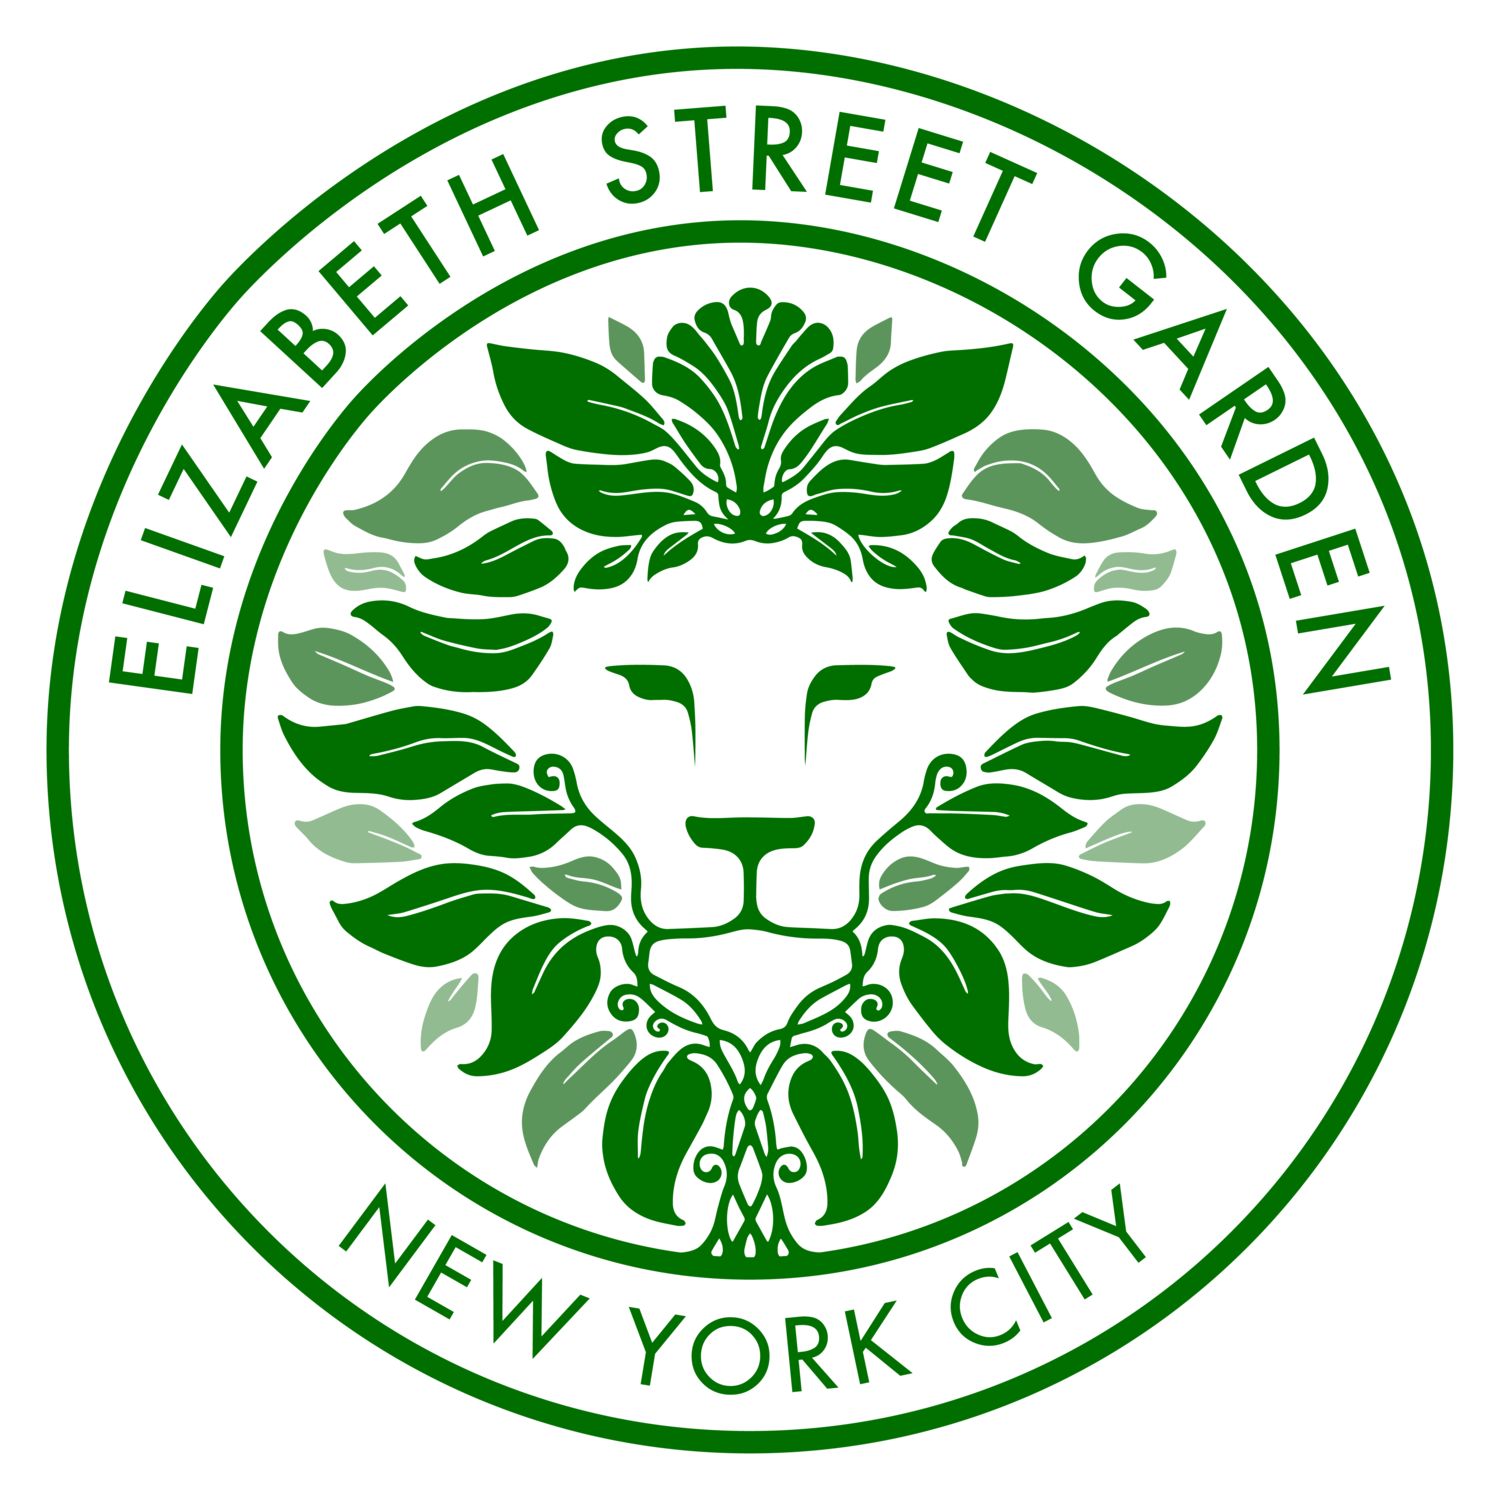 Elizabeth Street Garden - Official Website